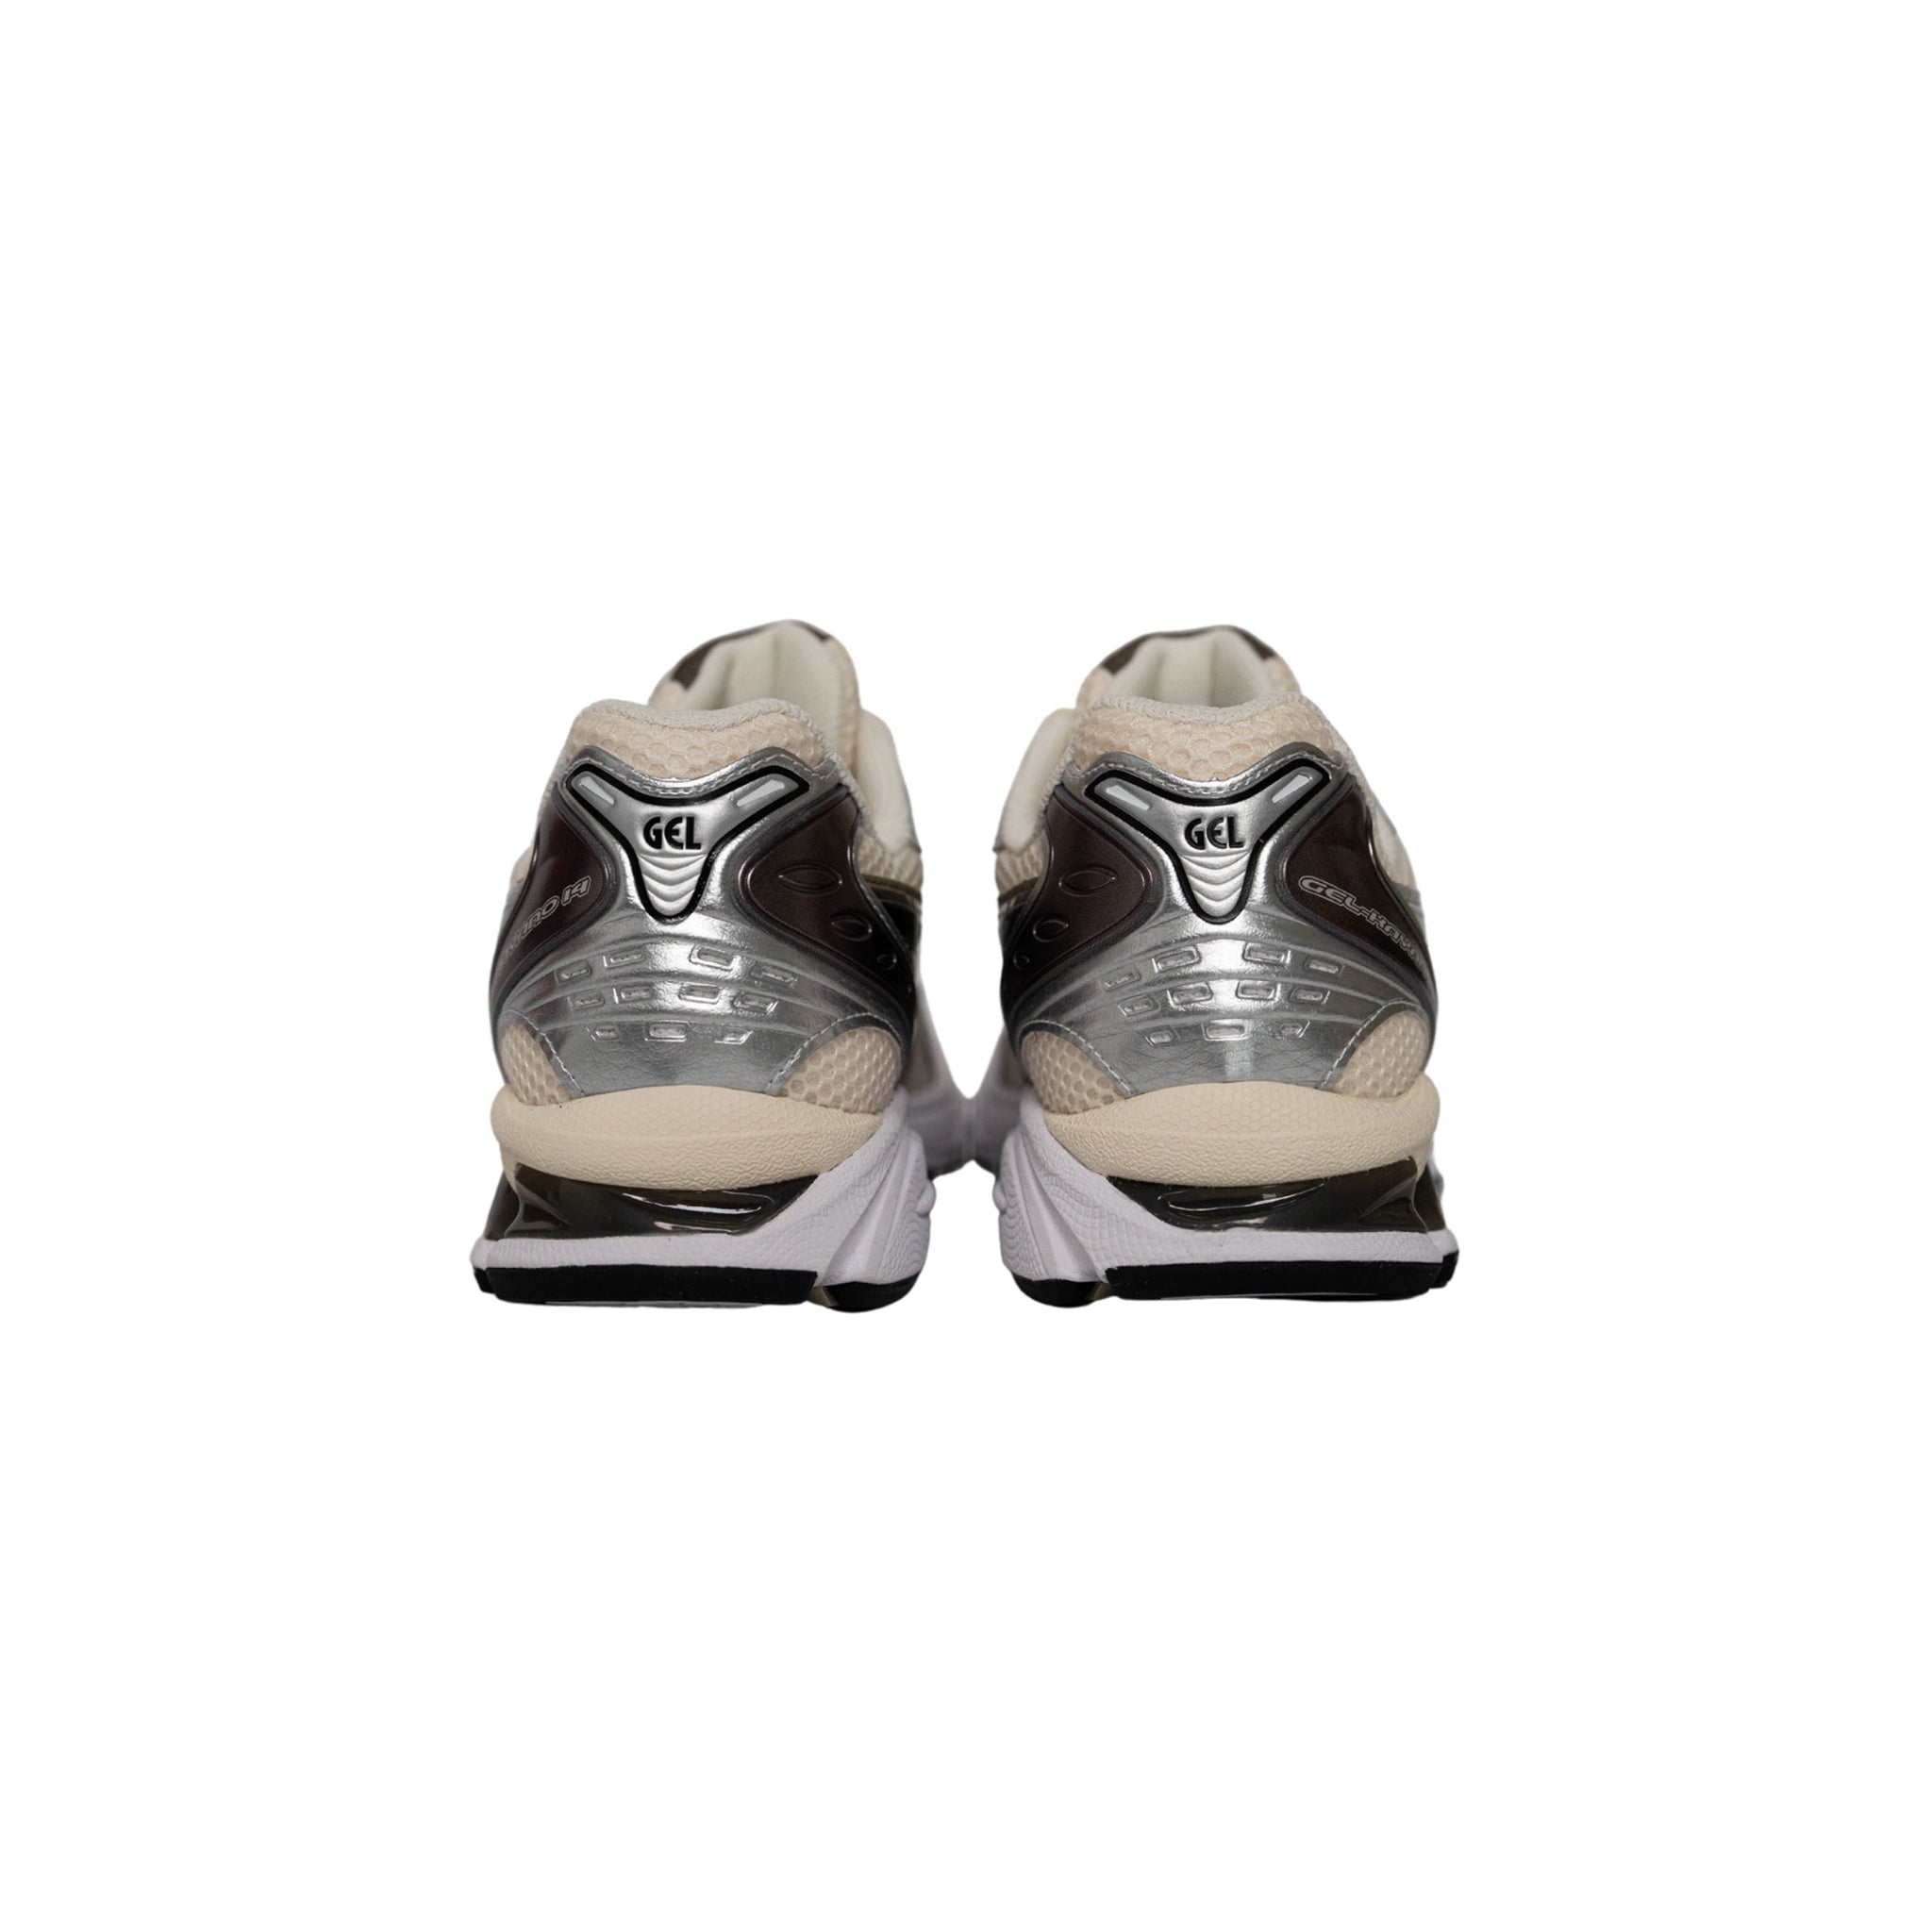 Gel-Kayano 14 sneaker in crema